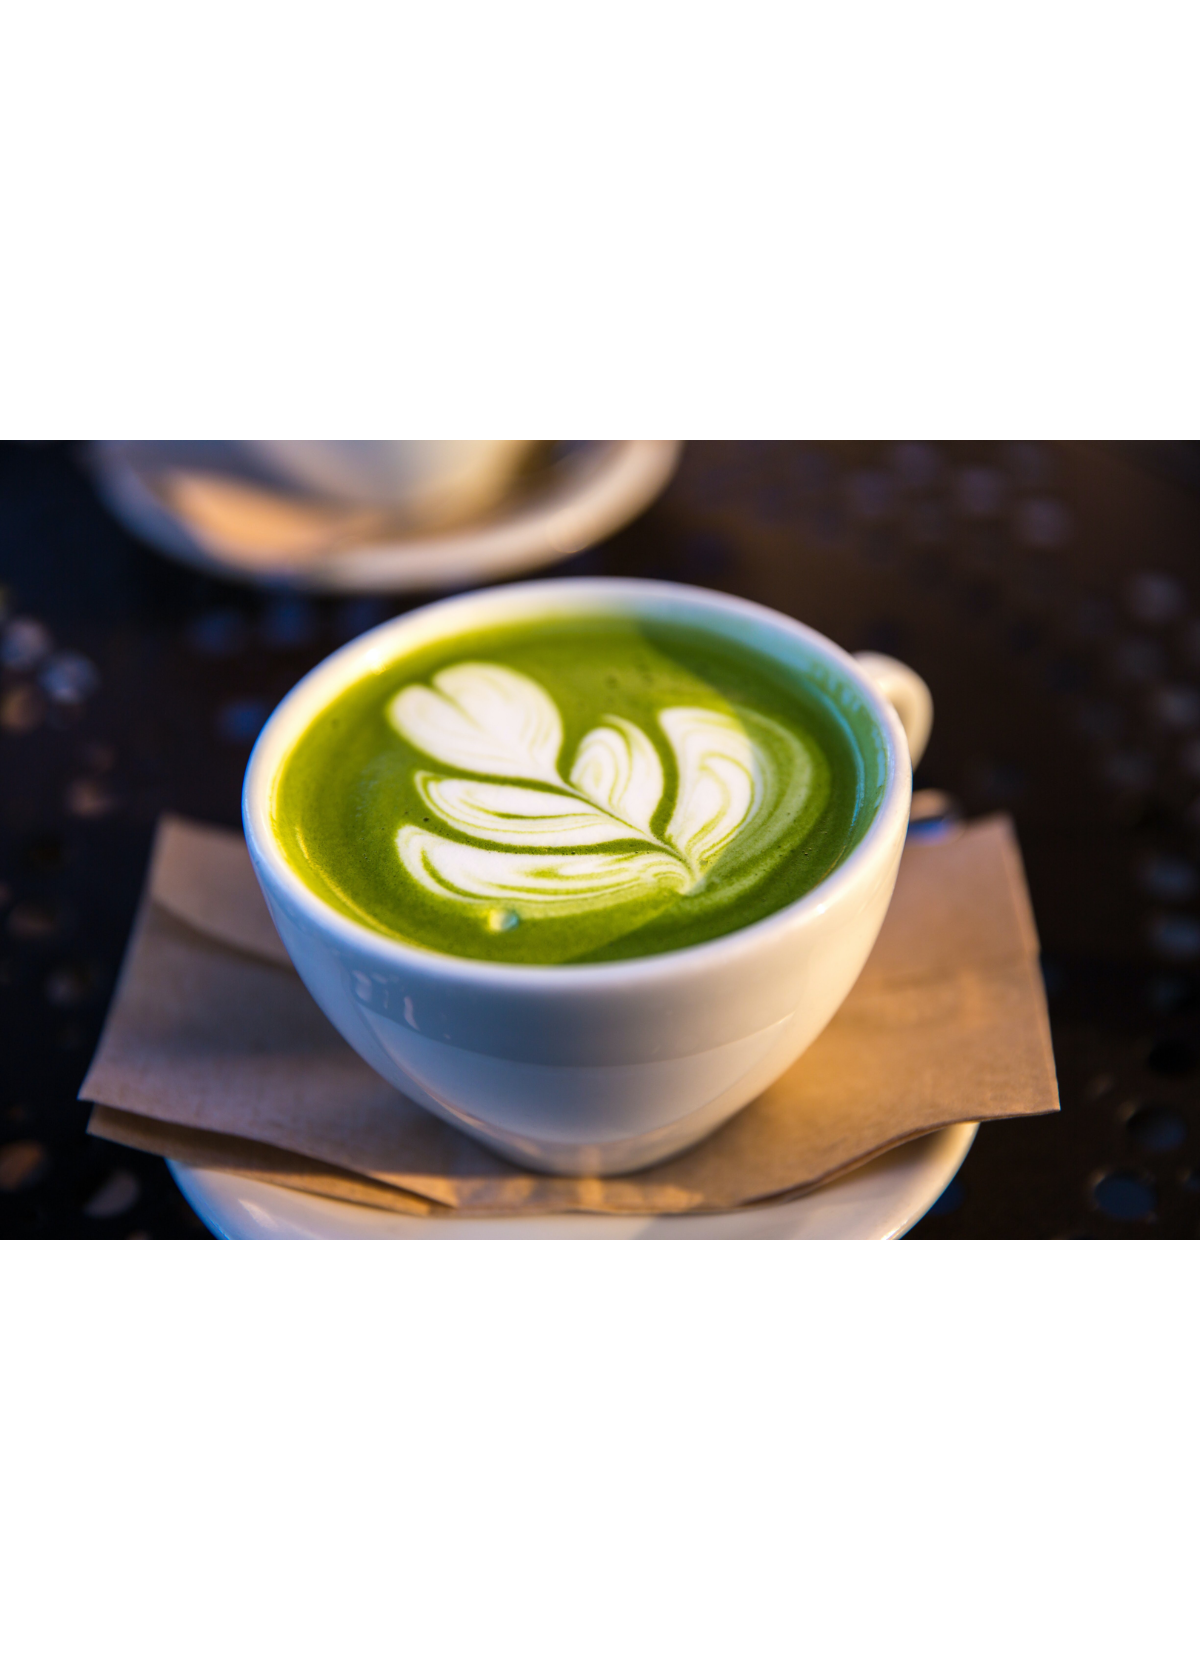 Green Coffee Aficionados Rejoice: The 6 Best Green Coffee Picks